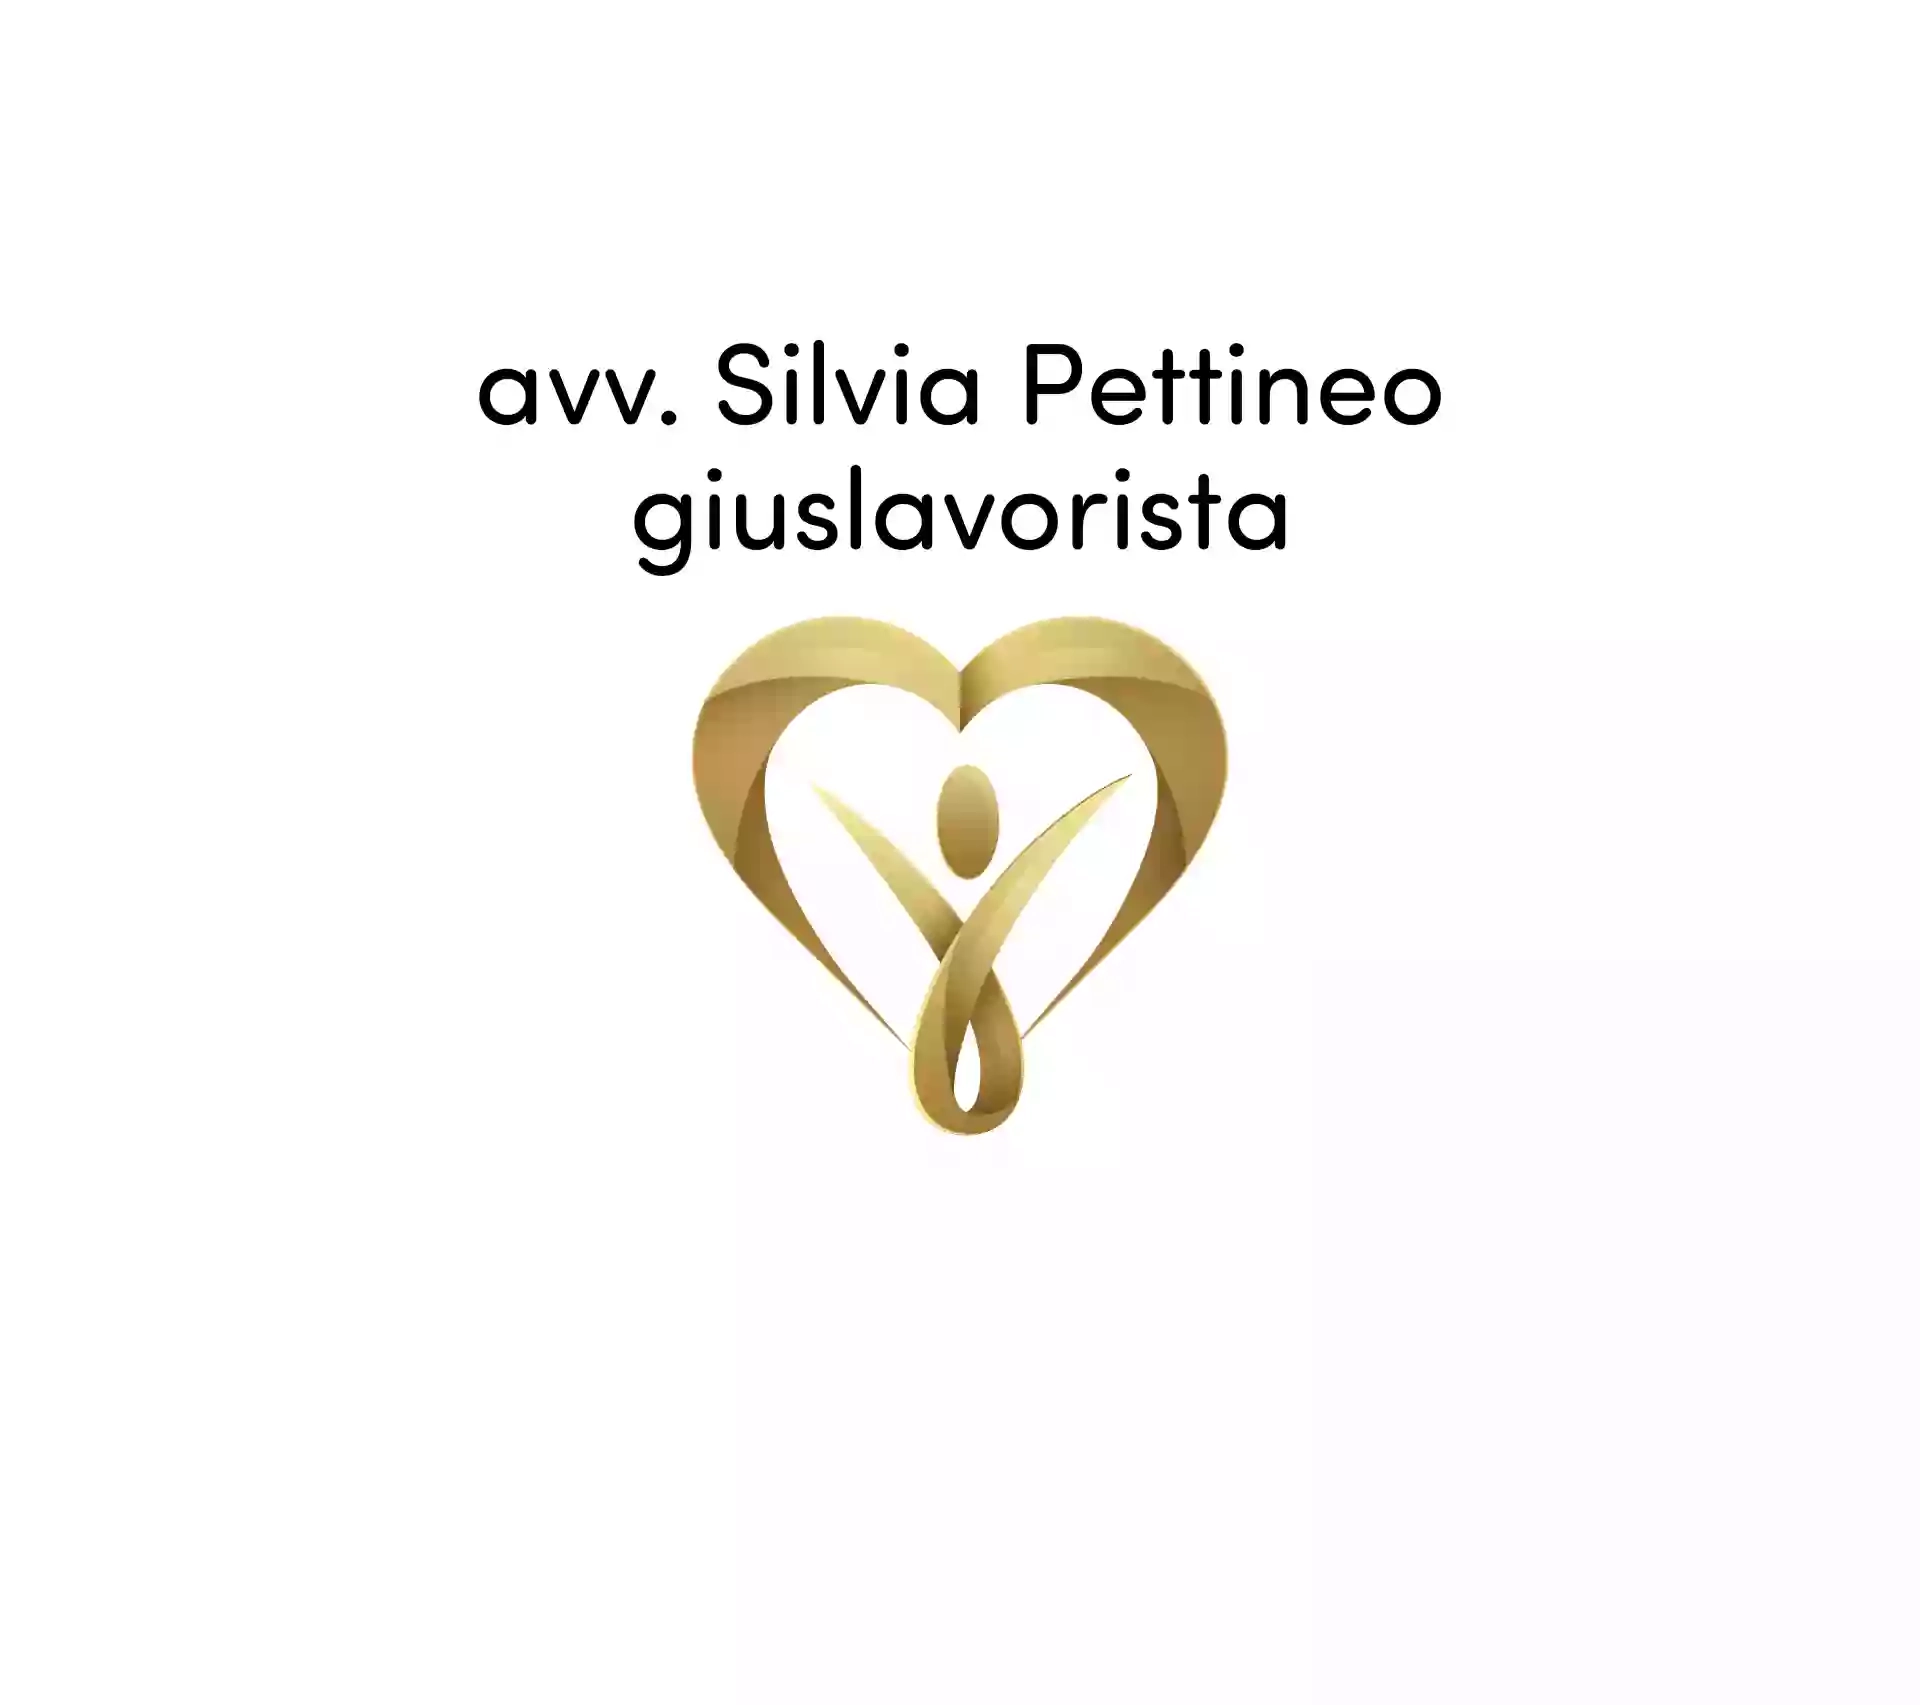 Avv. Silvia Pettineo - giuslavorista